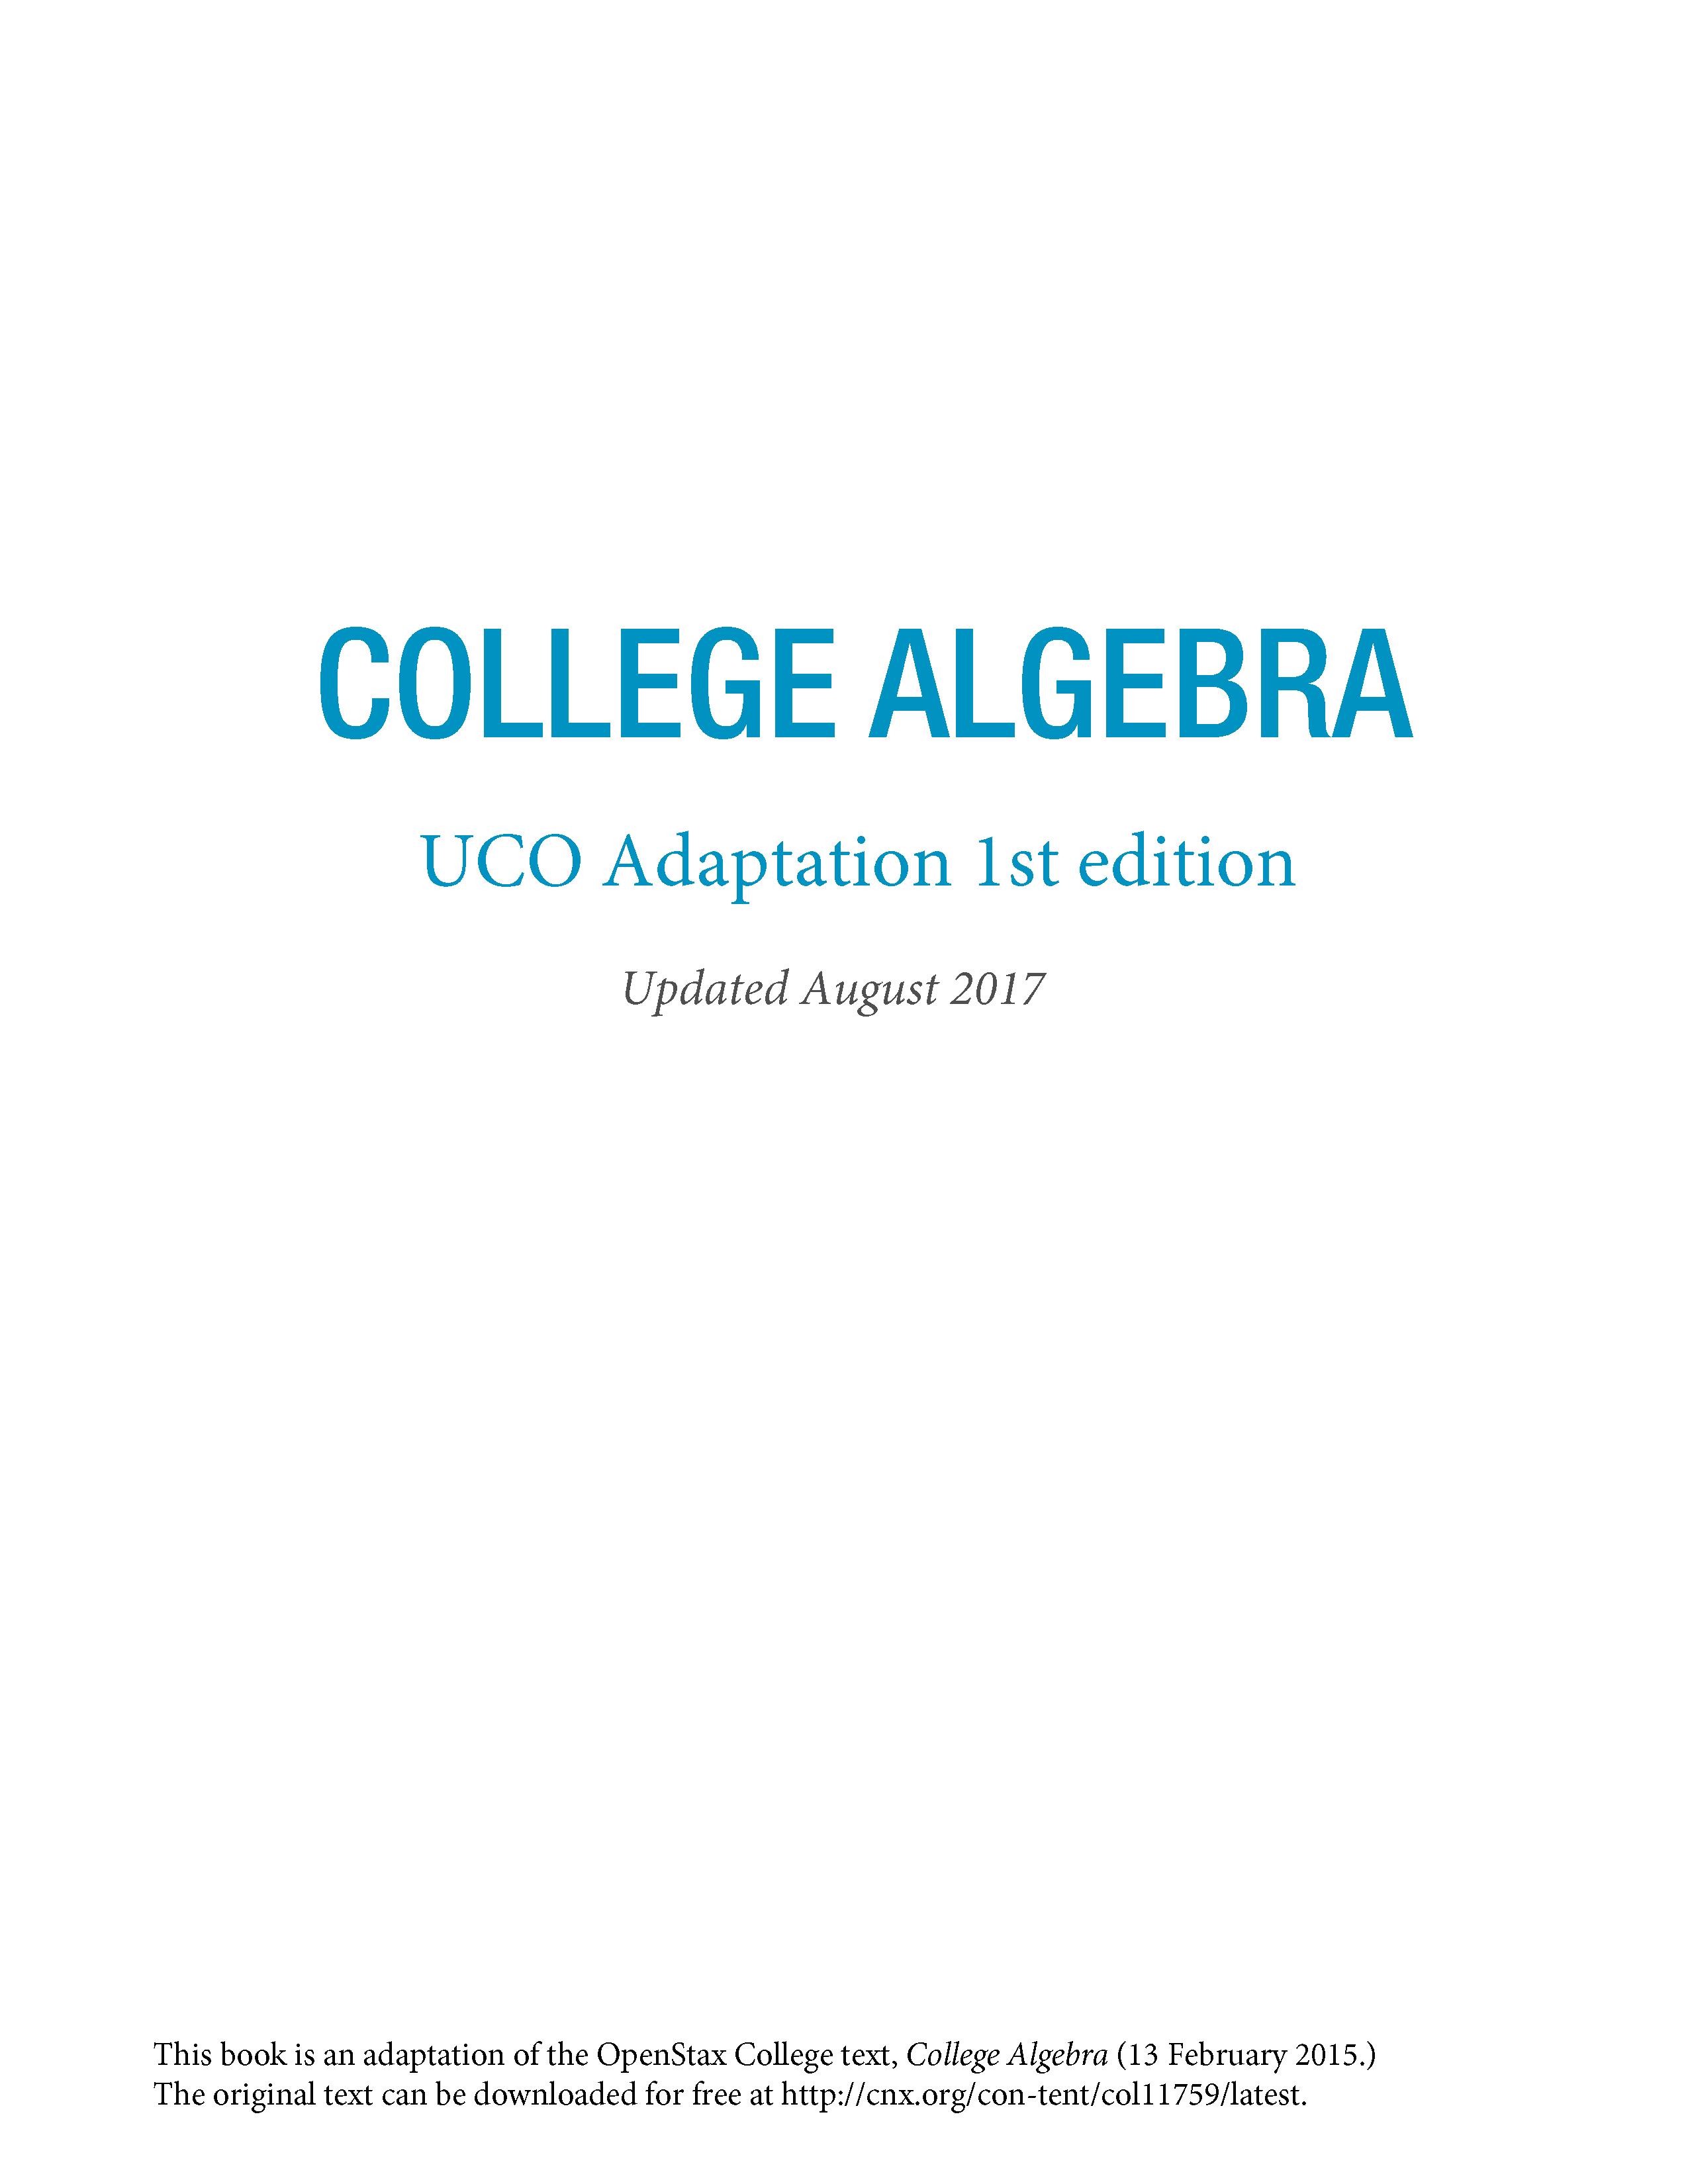 College Algebra - UCO Adaptation, 1st Edition